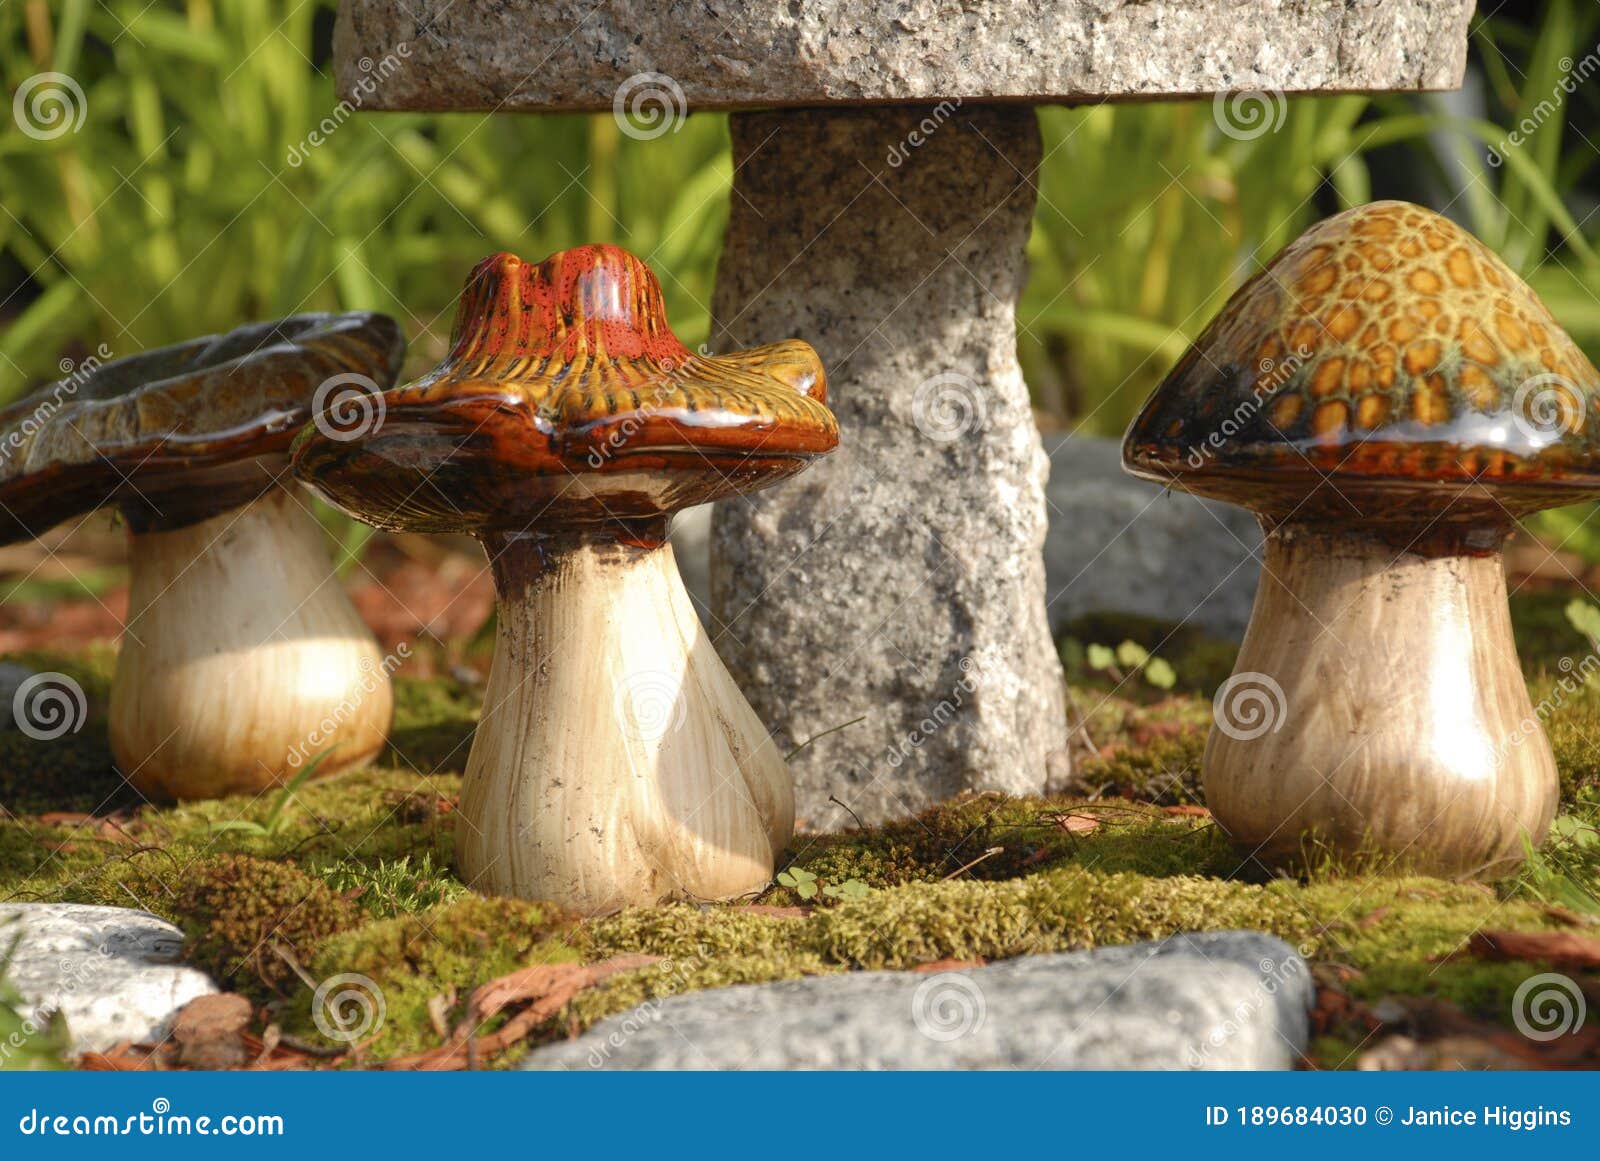 Mixed Color,M 160 Pcs Cute Tiny Mushrooms Mini Miniature Figurines Colorful Mushroom Figurines Indoor Outdoor Mushroom Statue Decor Mushroom Decoration for Garden Landscape Bonsai Craft Ornament 